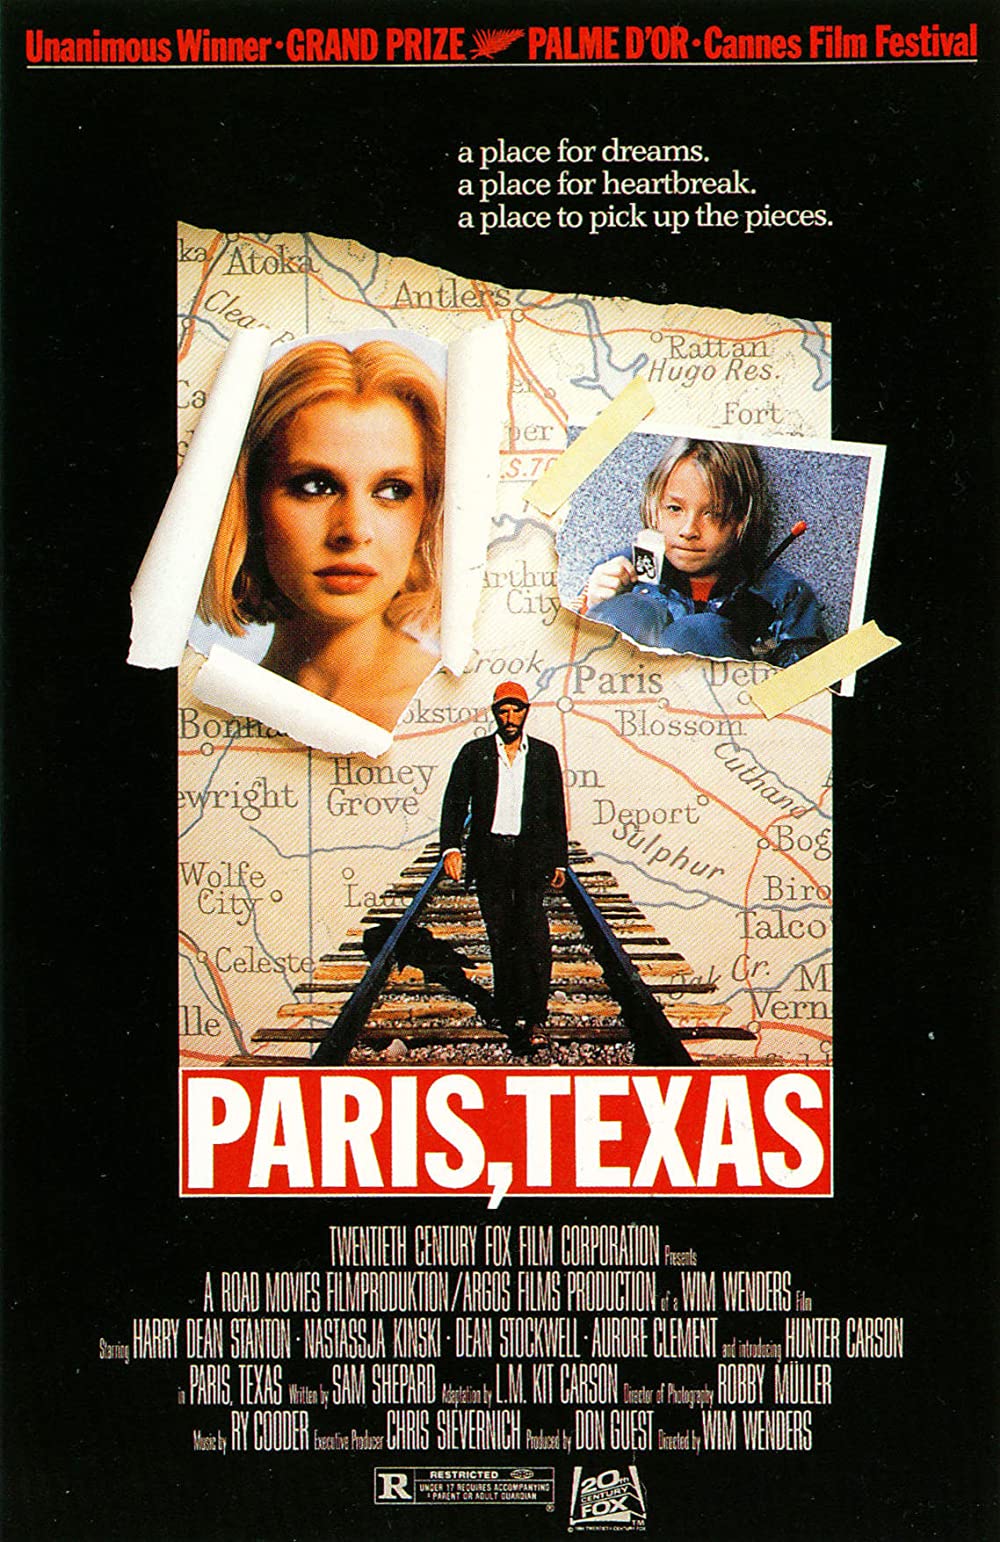 Filmbeschreibung zu Paris, Texas